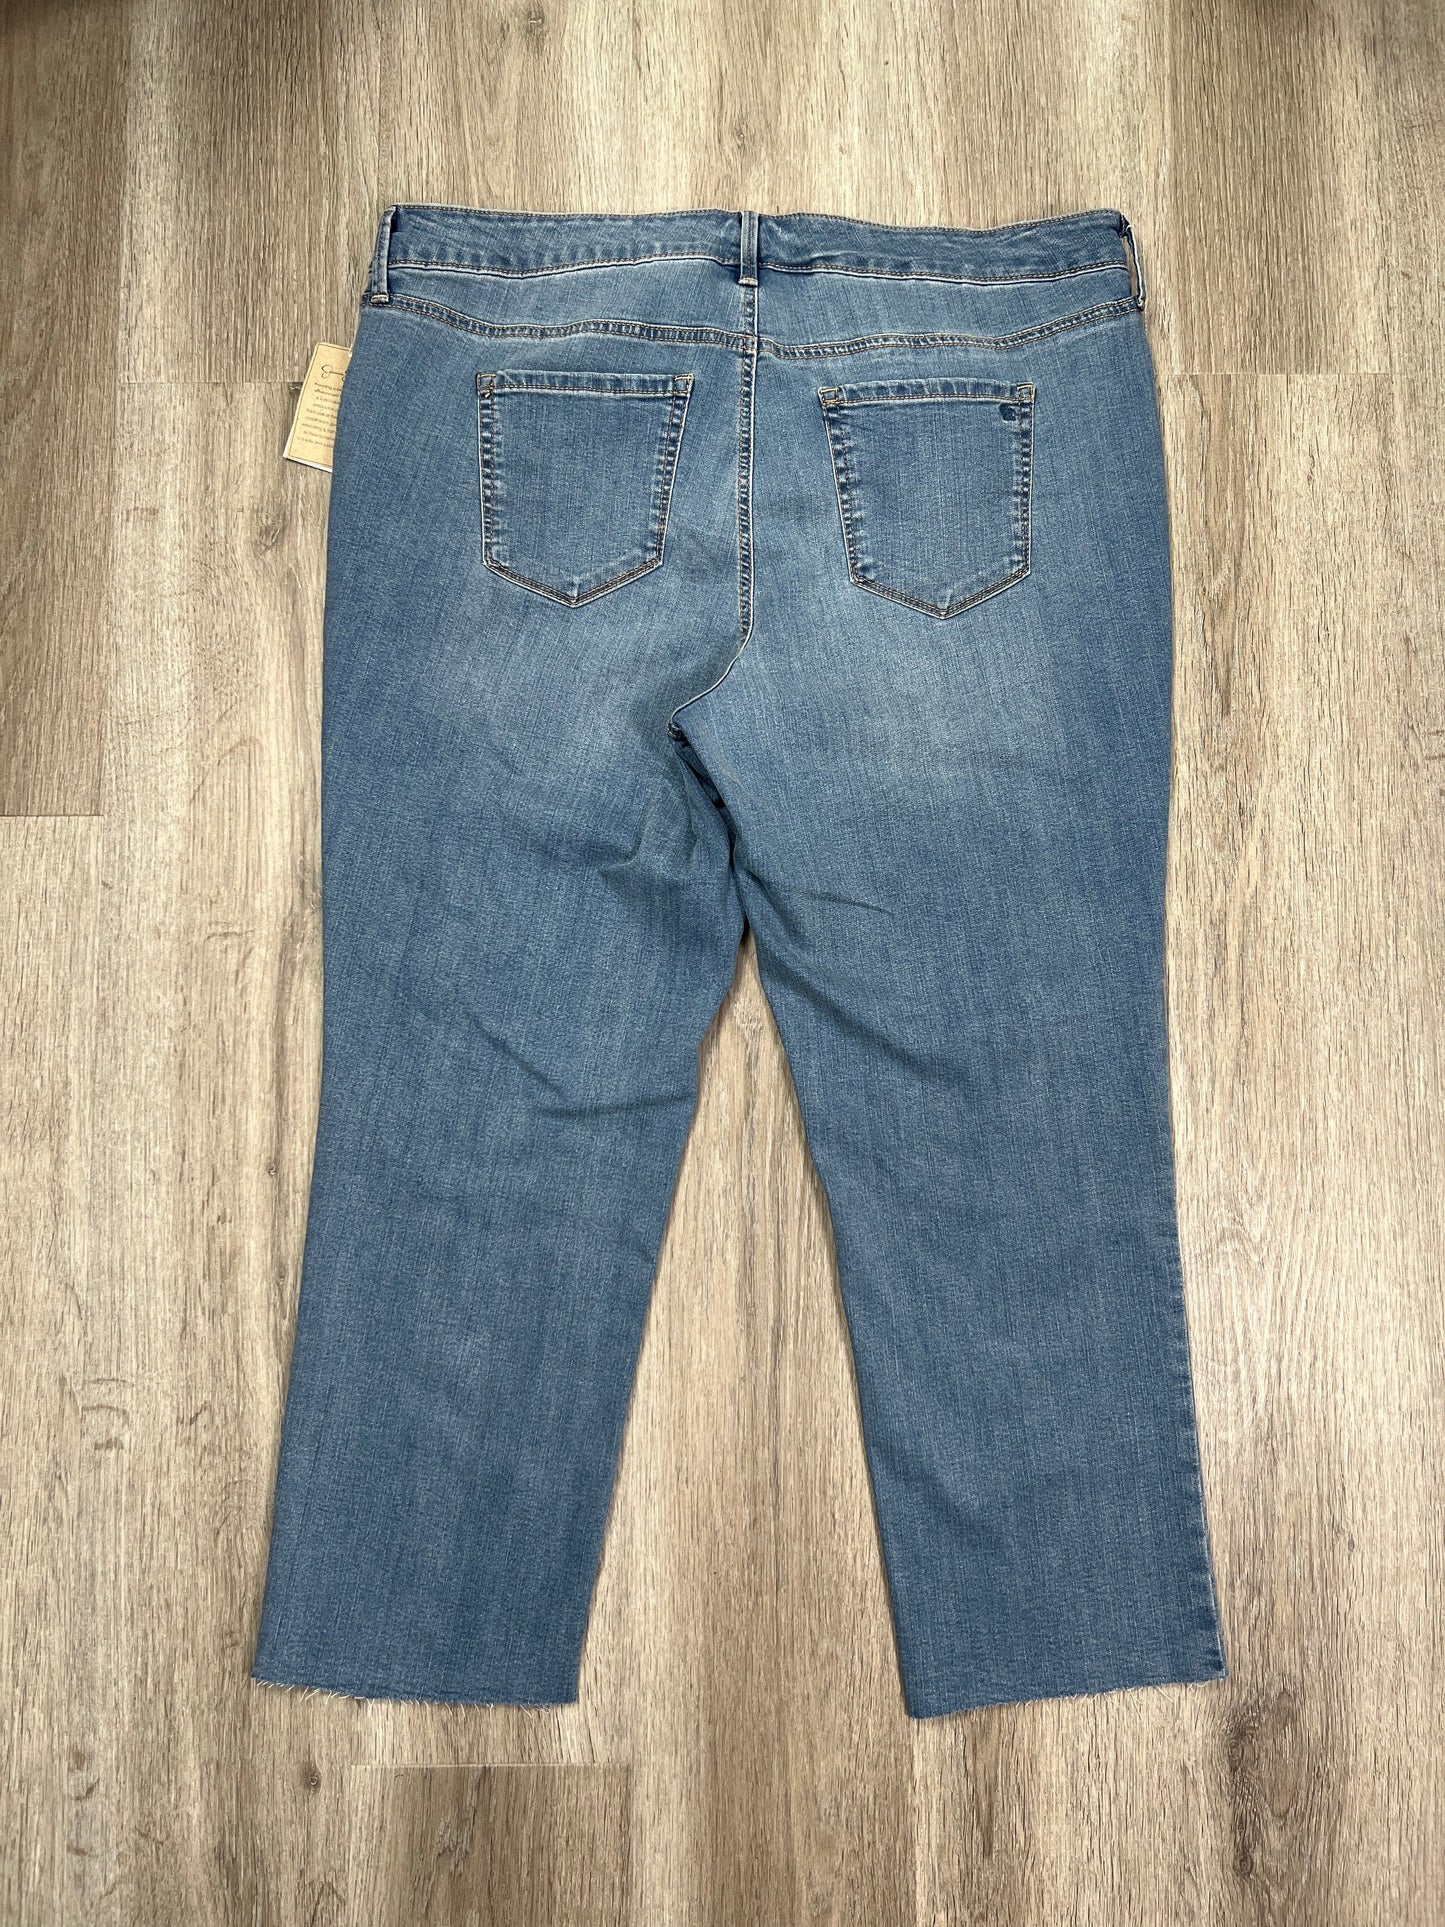 Blue Denim Jeans Straight Jessica Simpson, Size 20